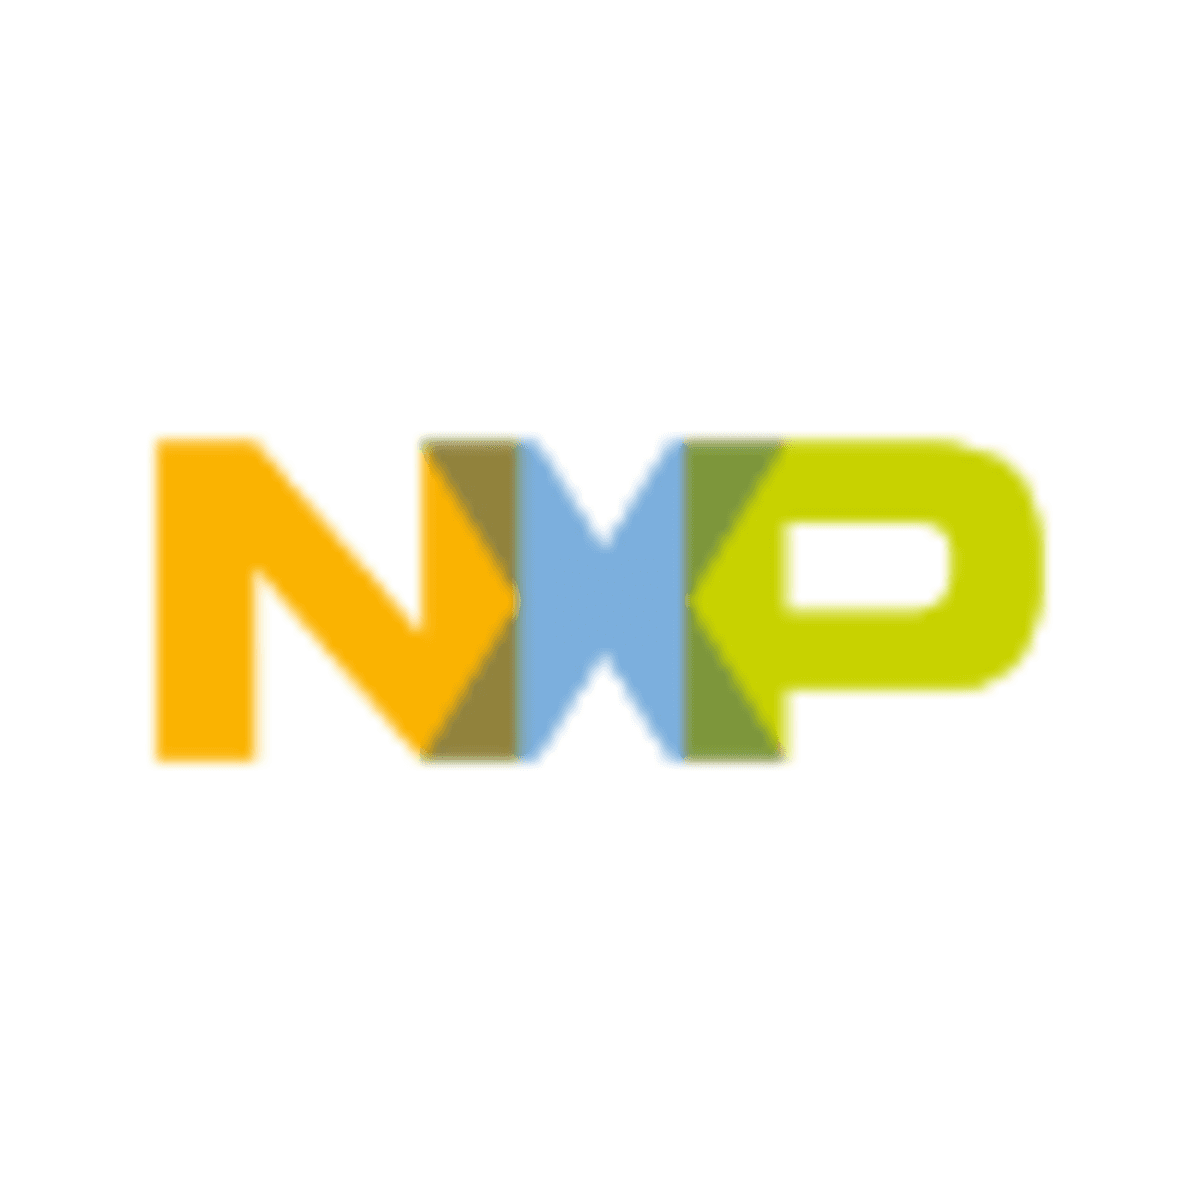 NXP Semiconductors maakt kwartaal- en jaarresultaten bekend image